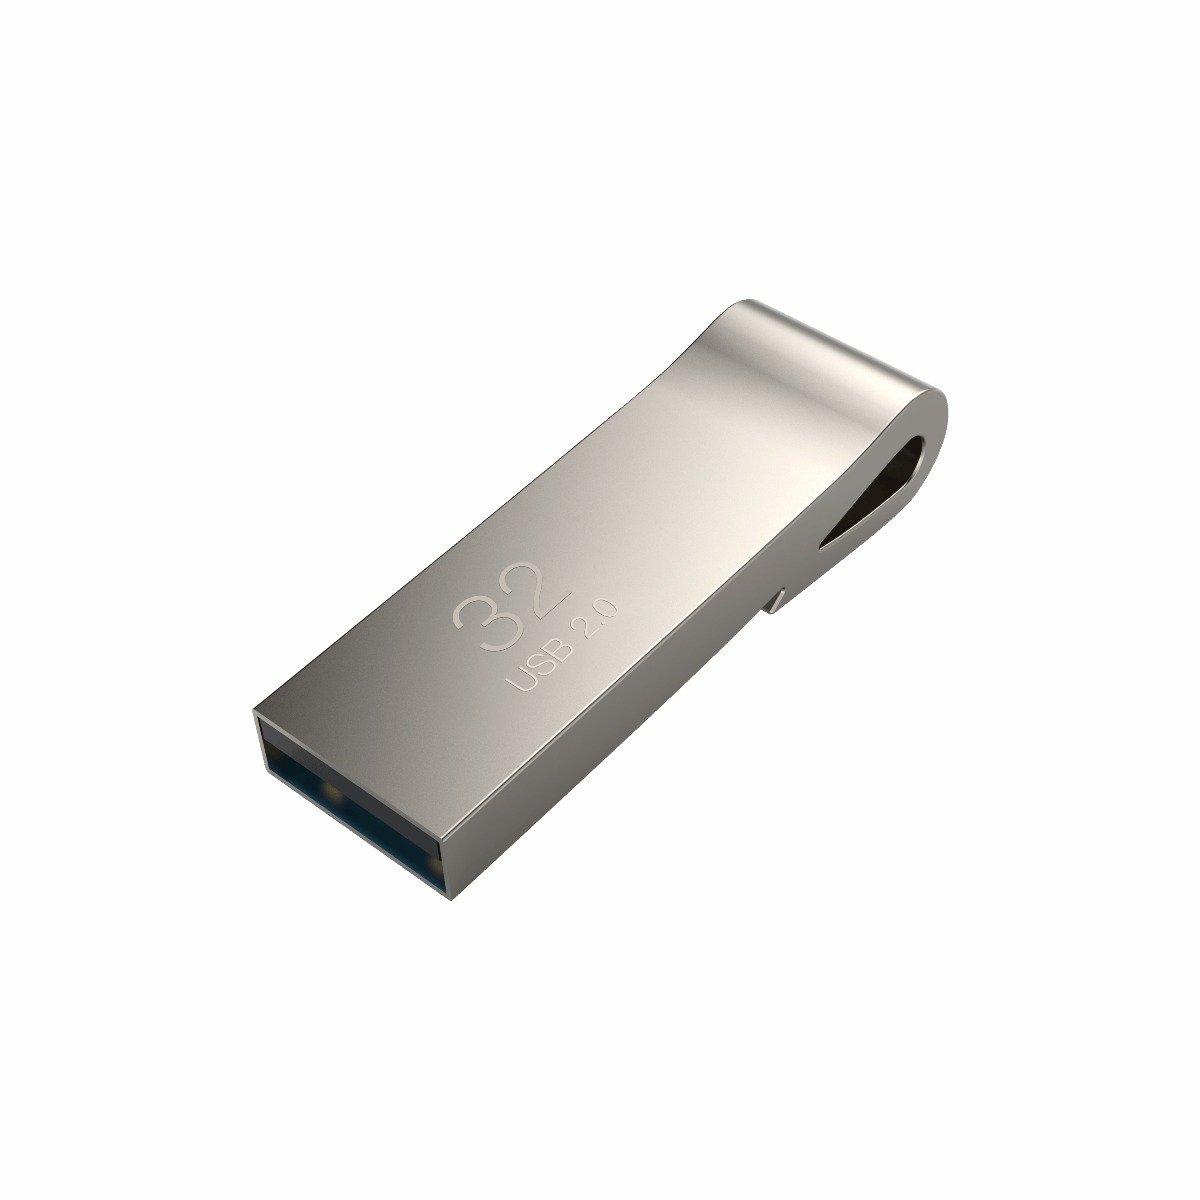 Memoria USB ACER 32GB, USB 2,0 FLASH DRIVE, PLATEADA